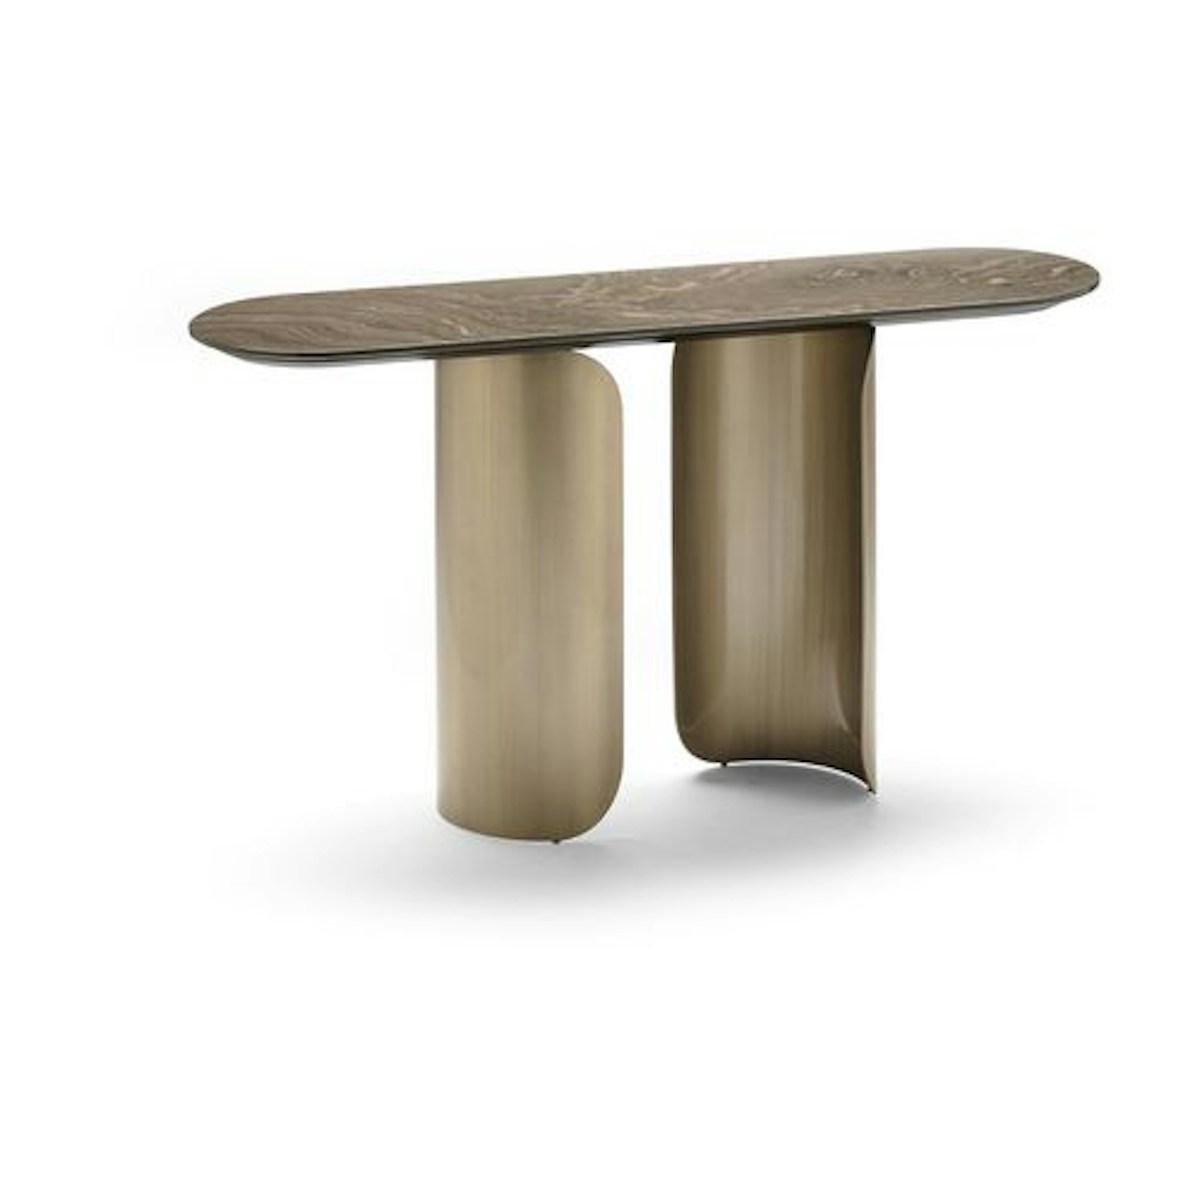 Wooden console table | Shop console tables online at LuxDeco.com